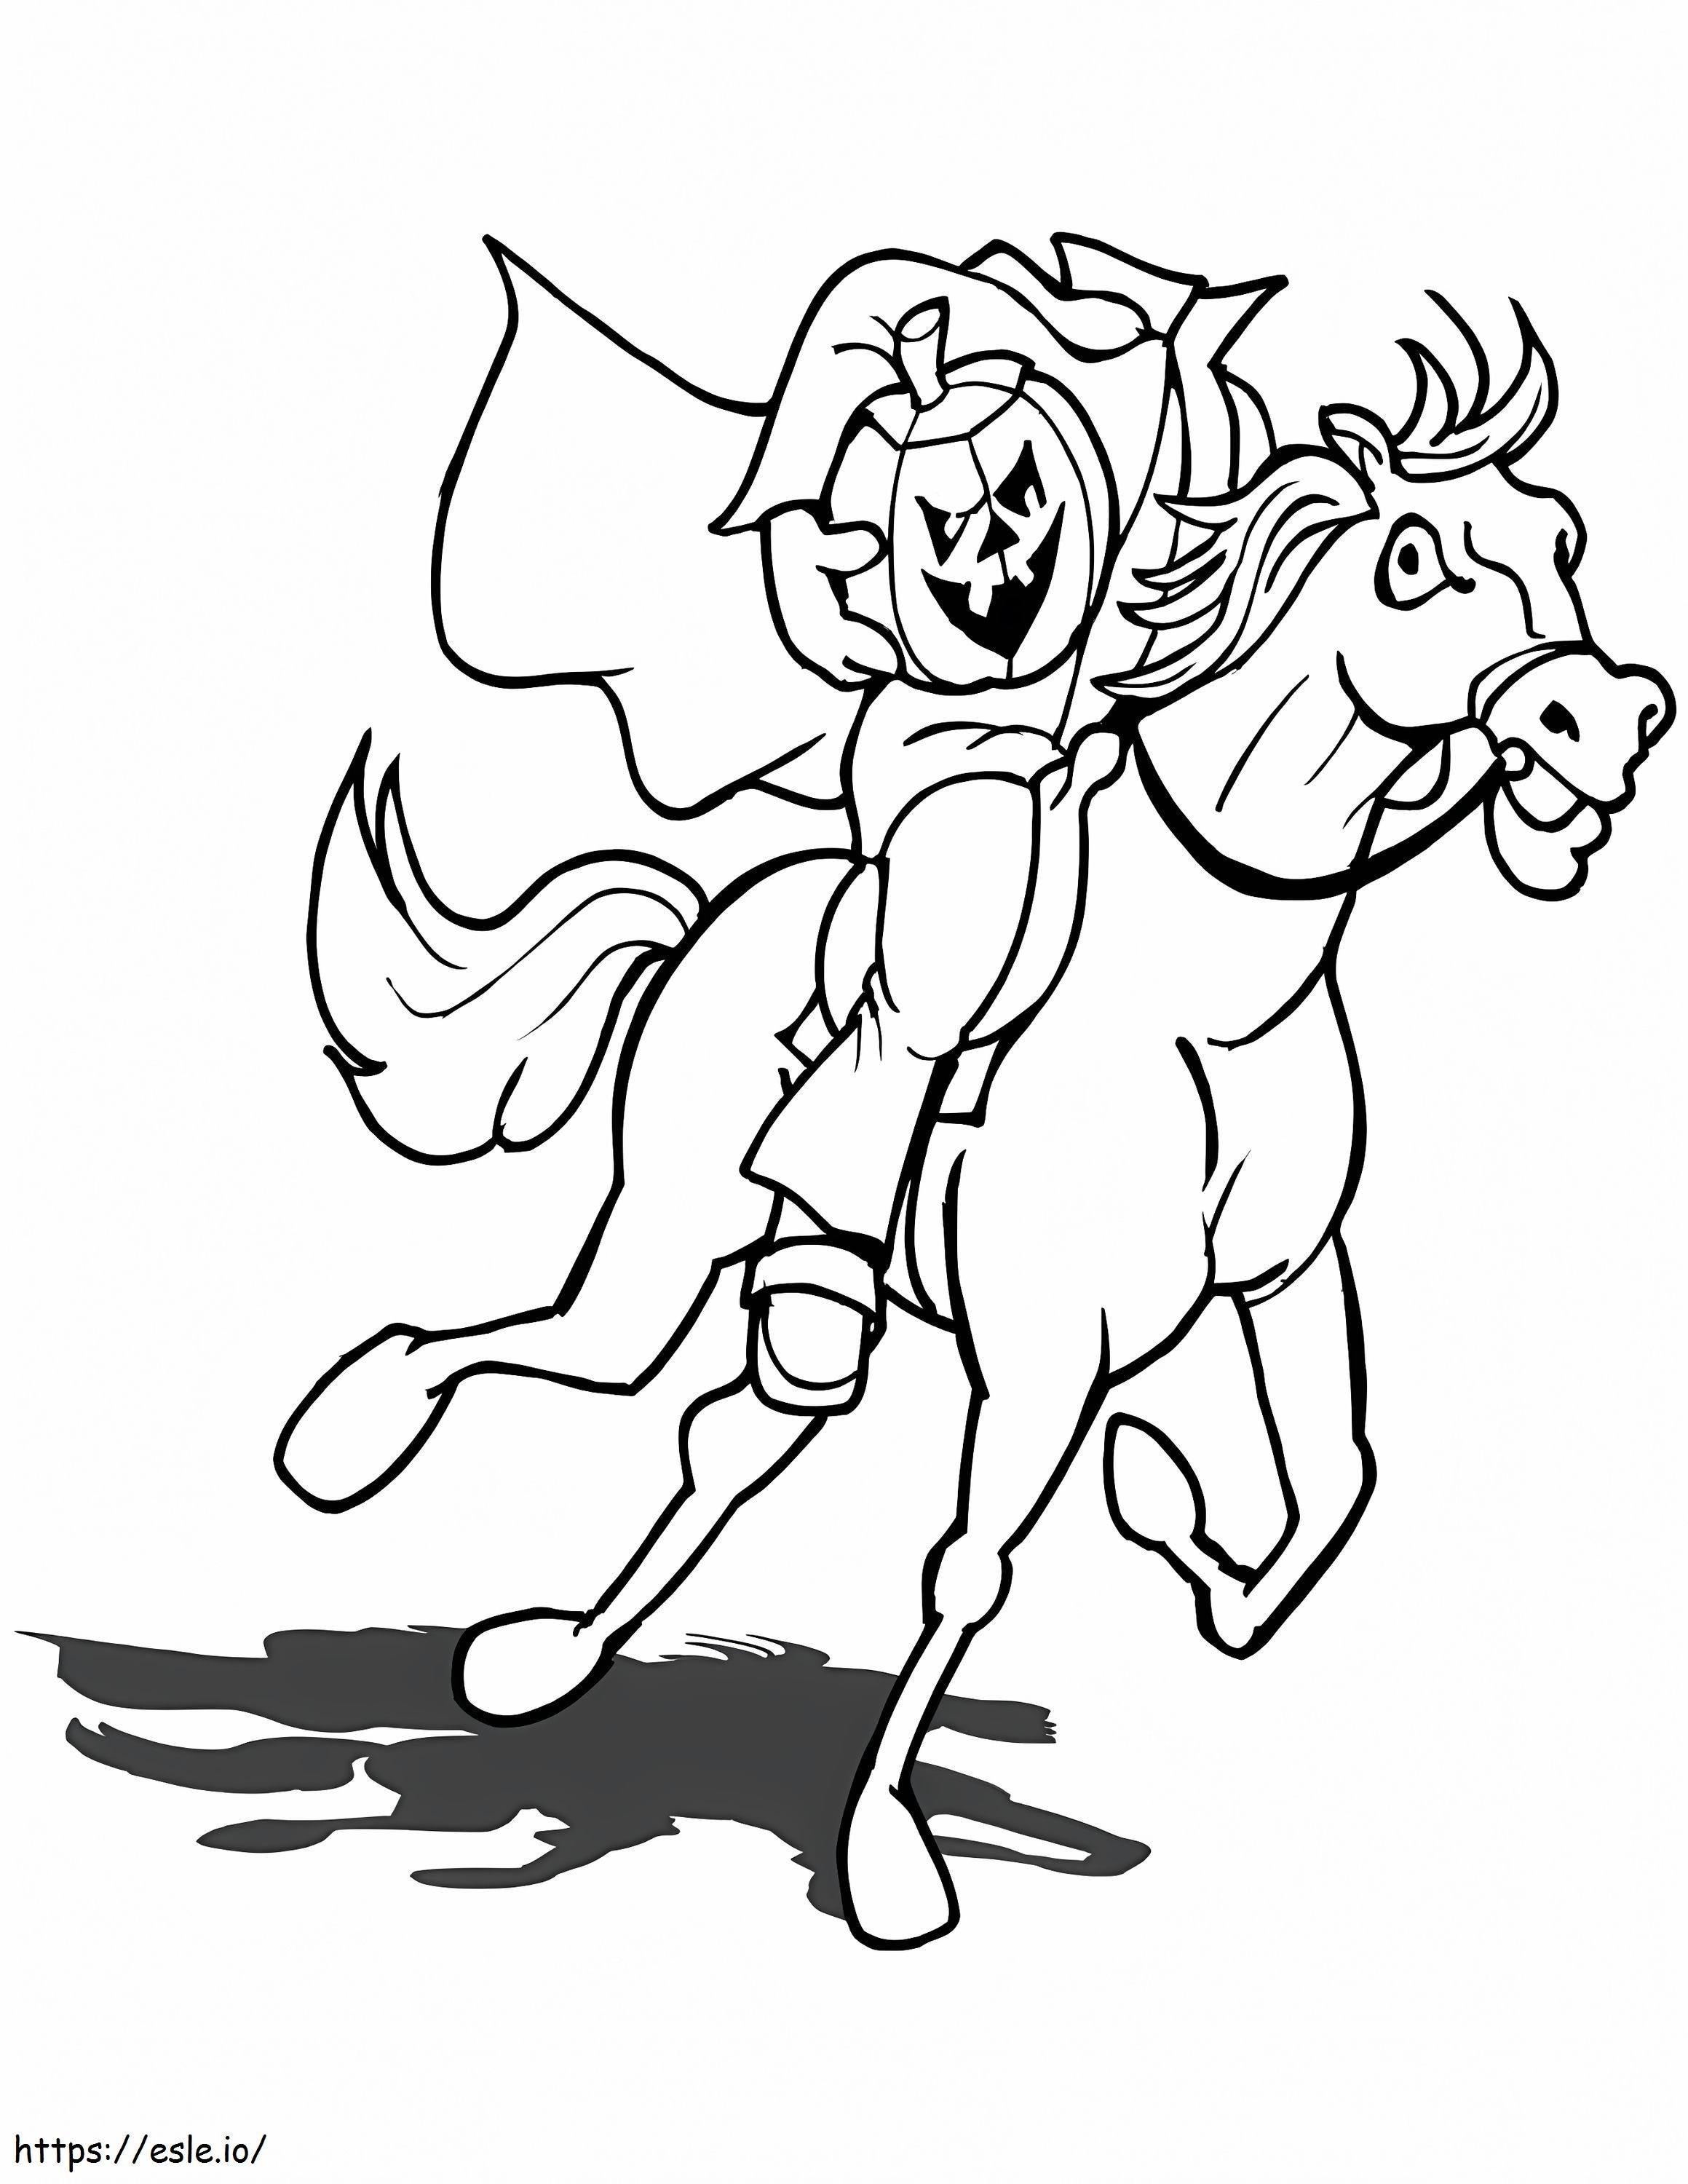 Halloween Headless Horseman coloring page